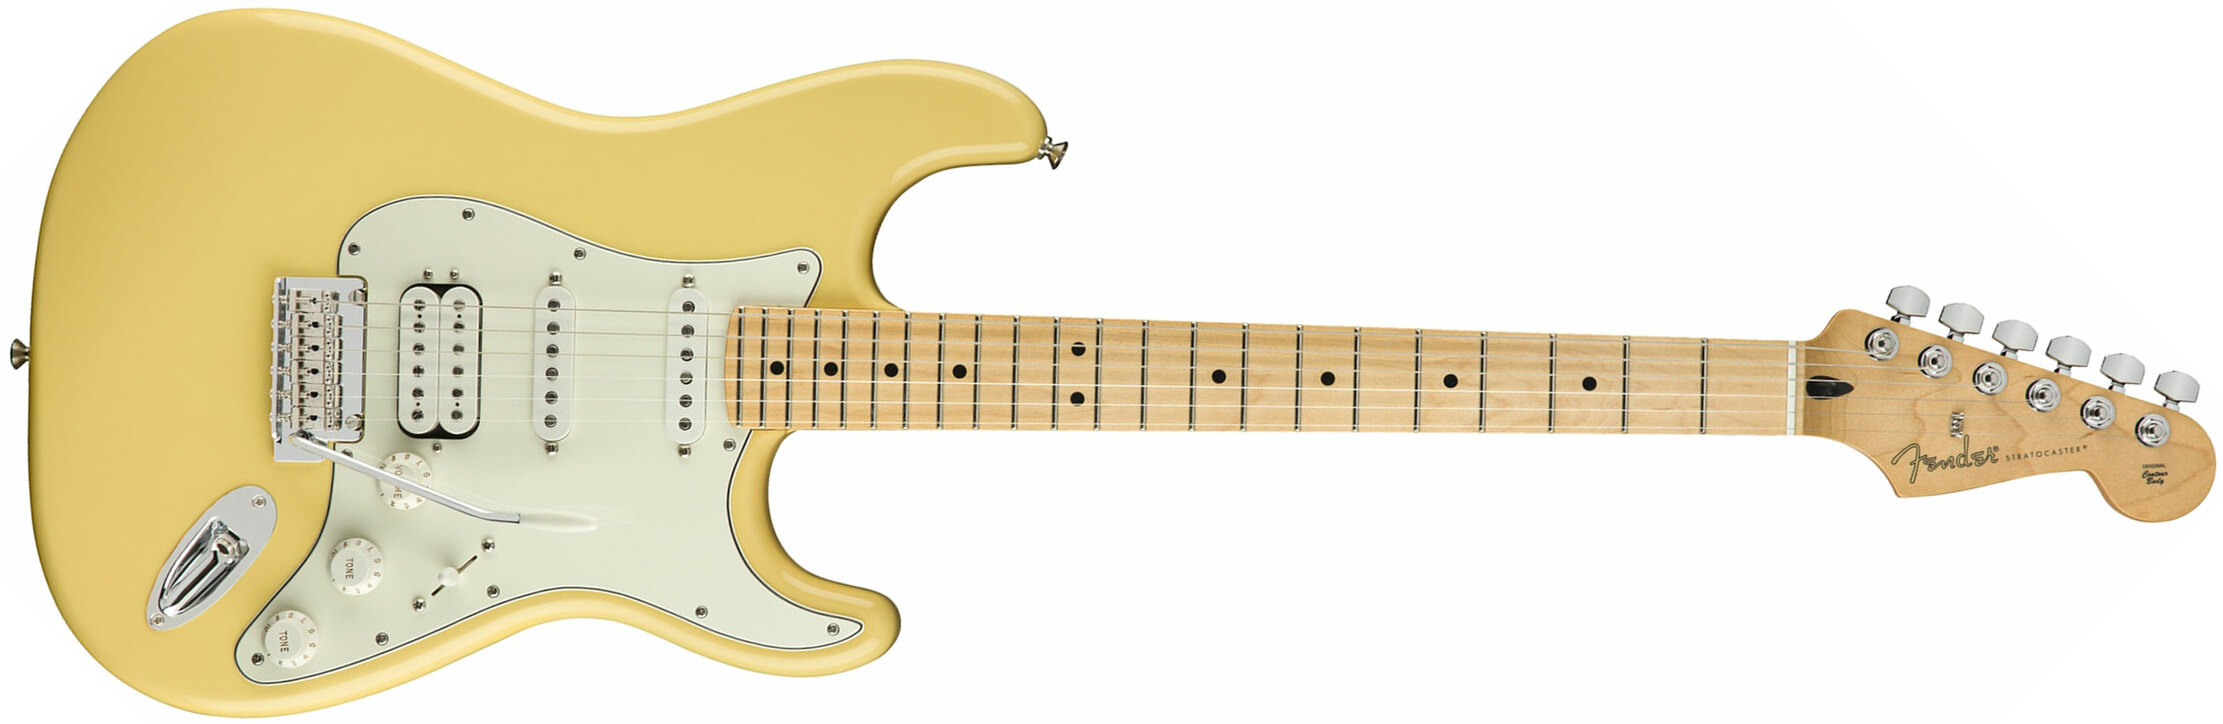 Fender Strat Player Mex Hss Mn - Buttercream - Str shape electric guitar - Main picture